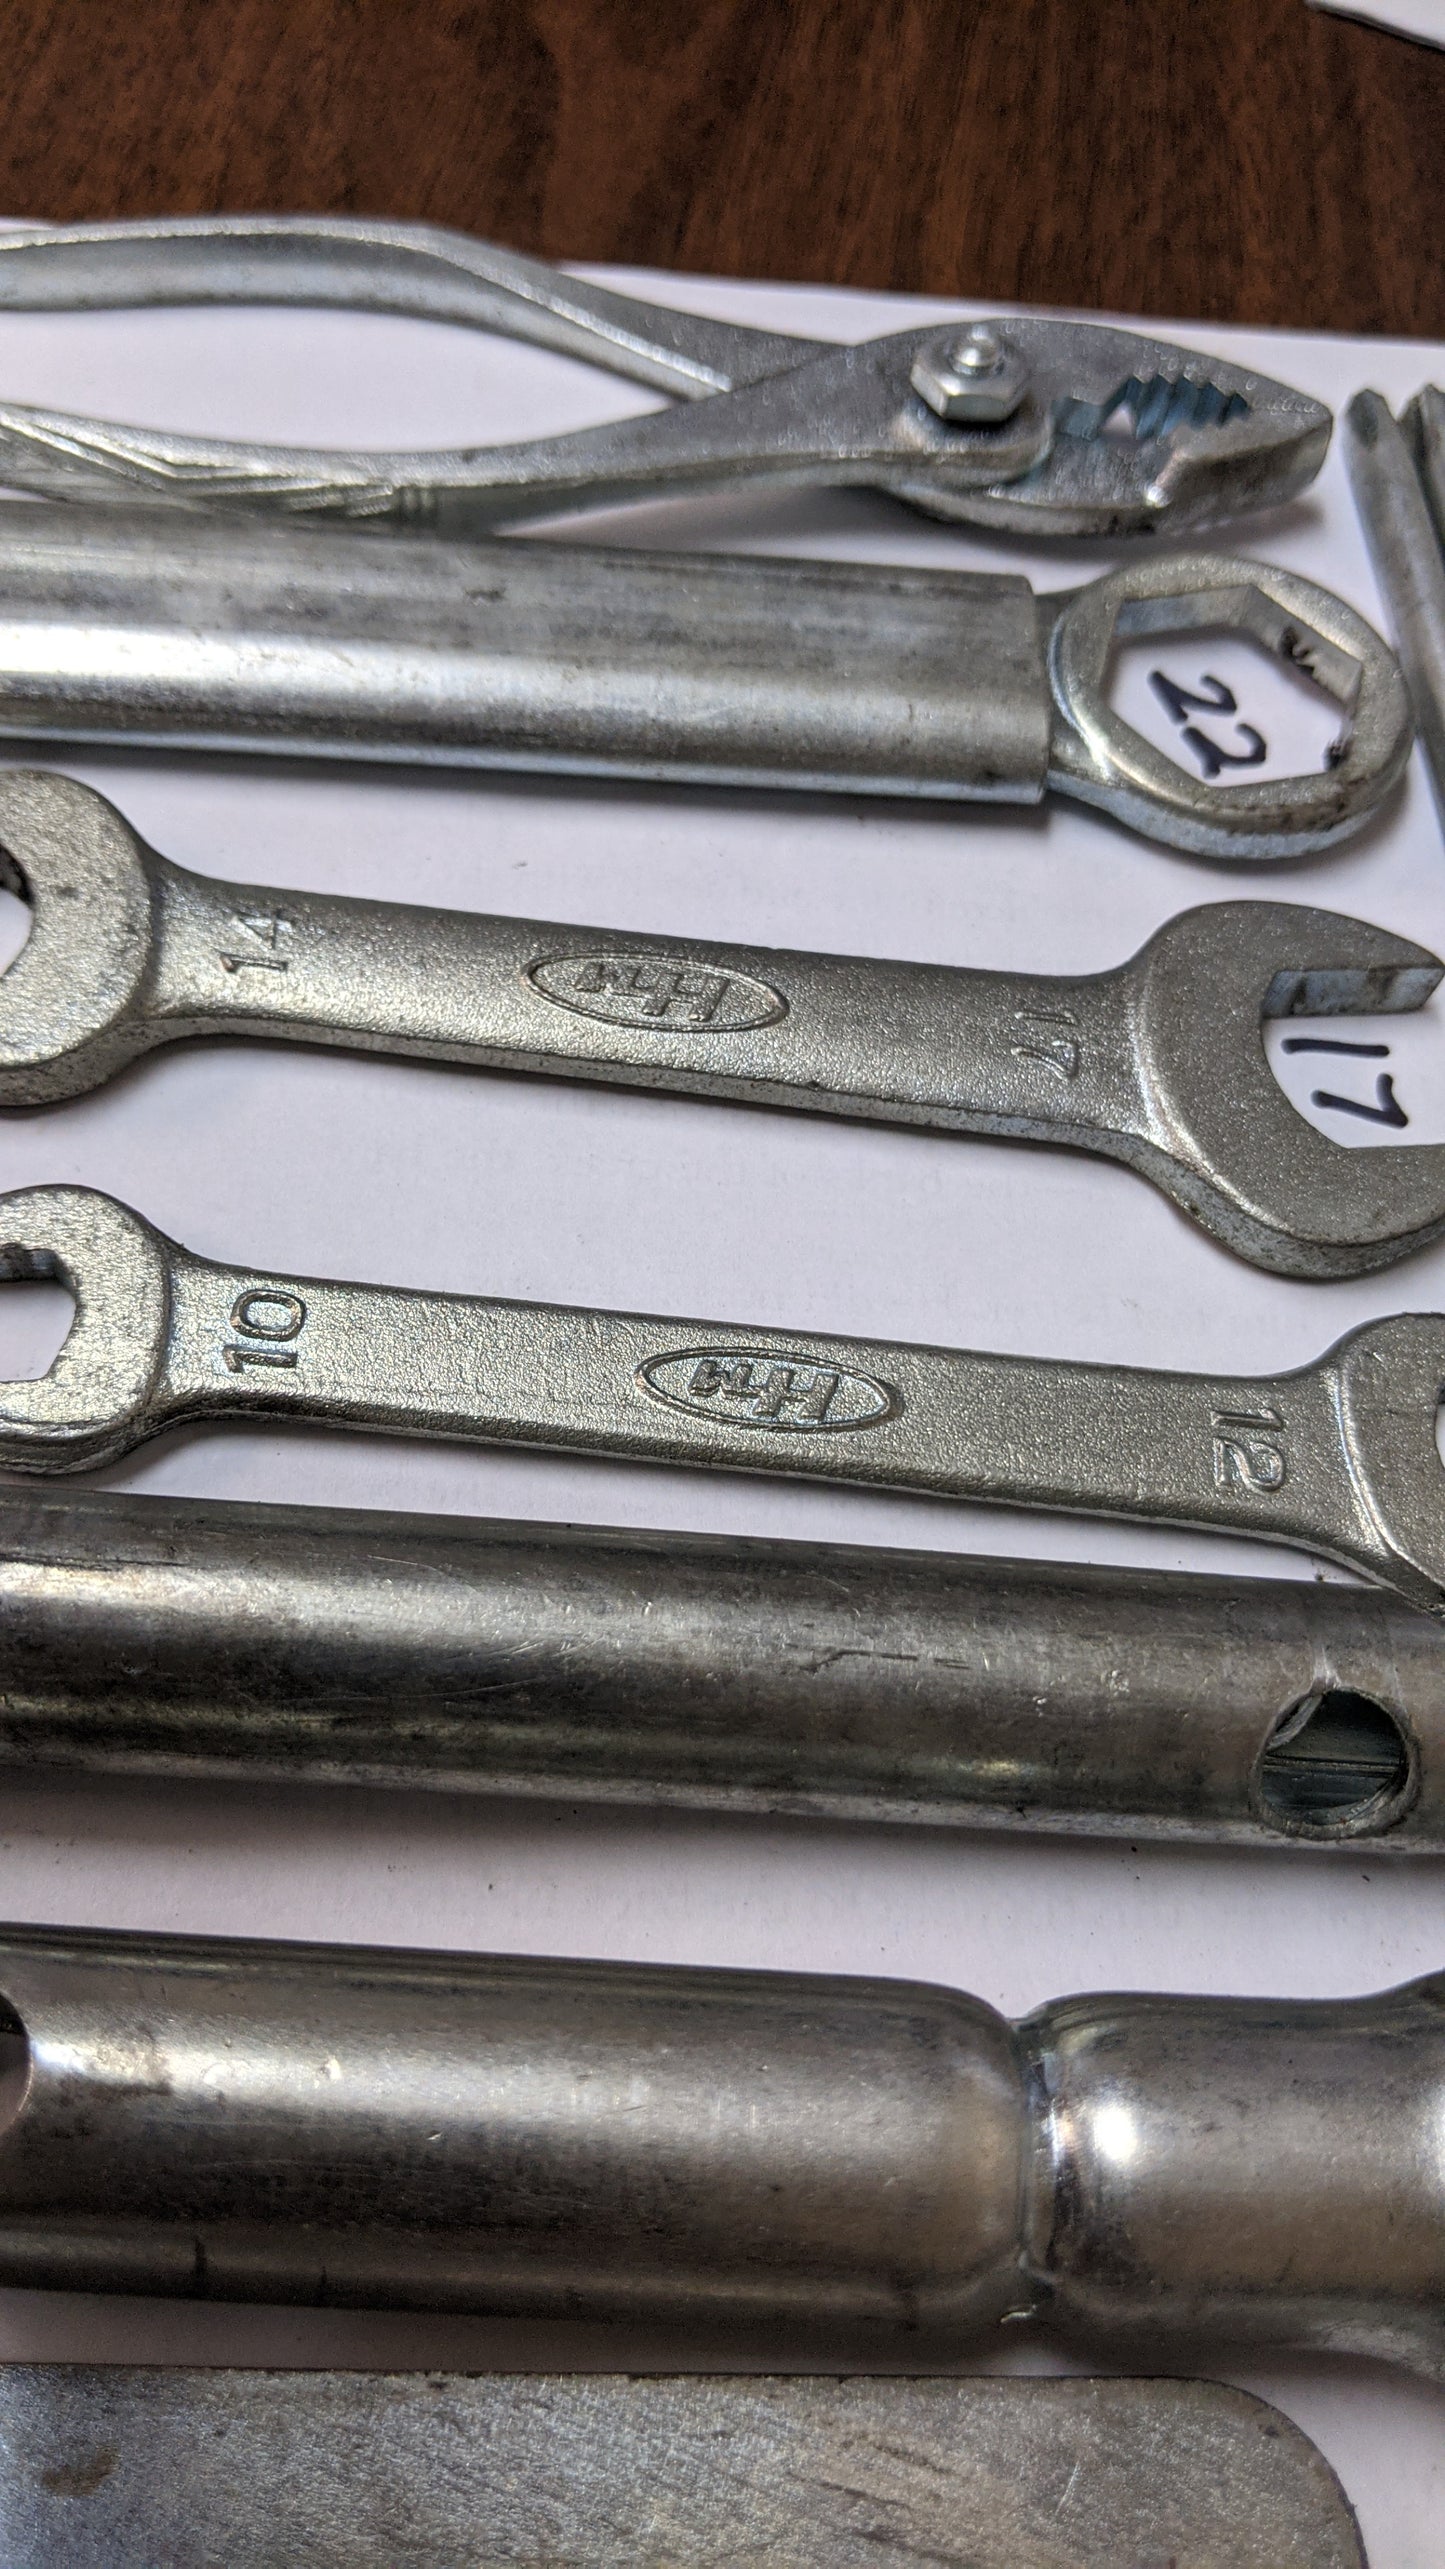 Honda CB400F OEM tool kit Museum Quality Tools 89010-377-000 sku 6642